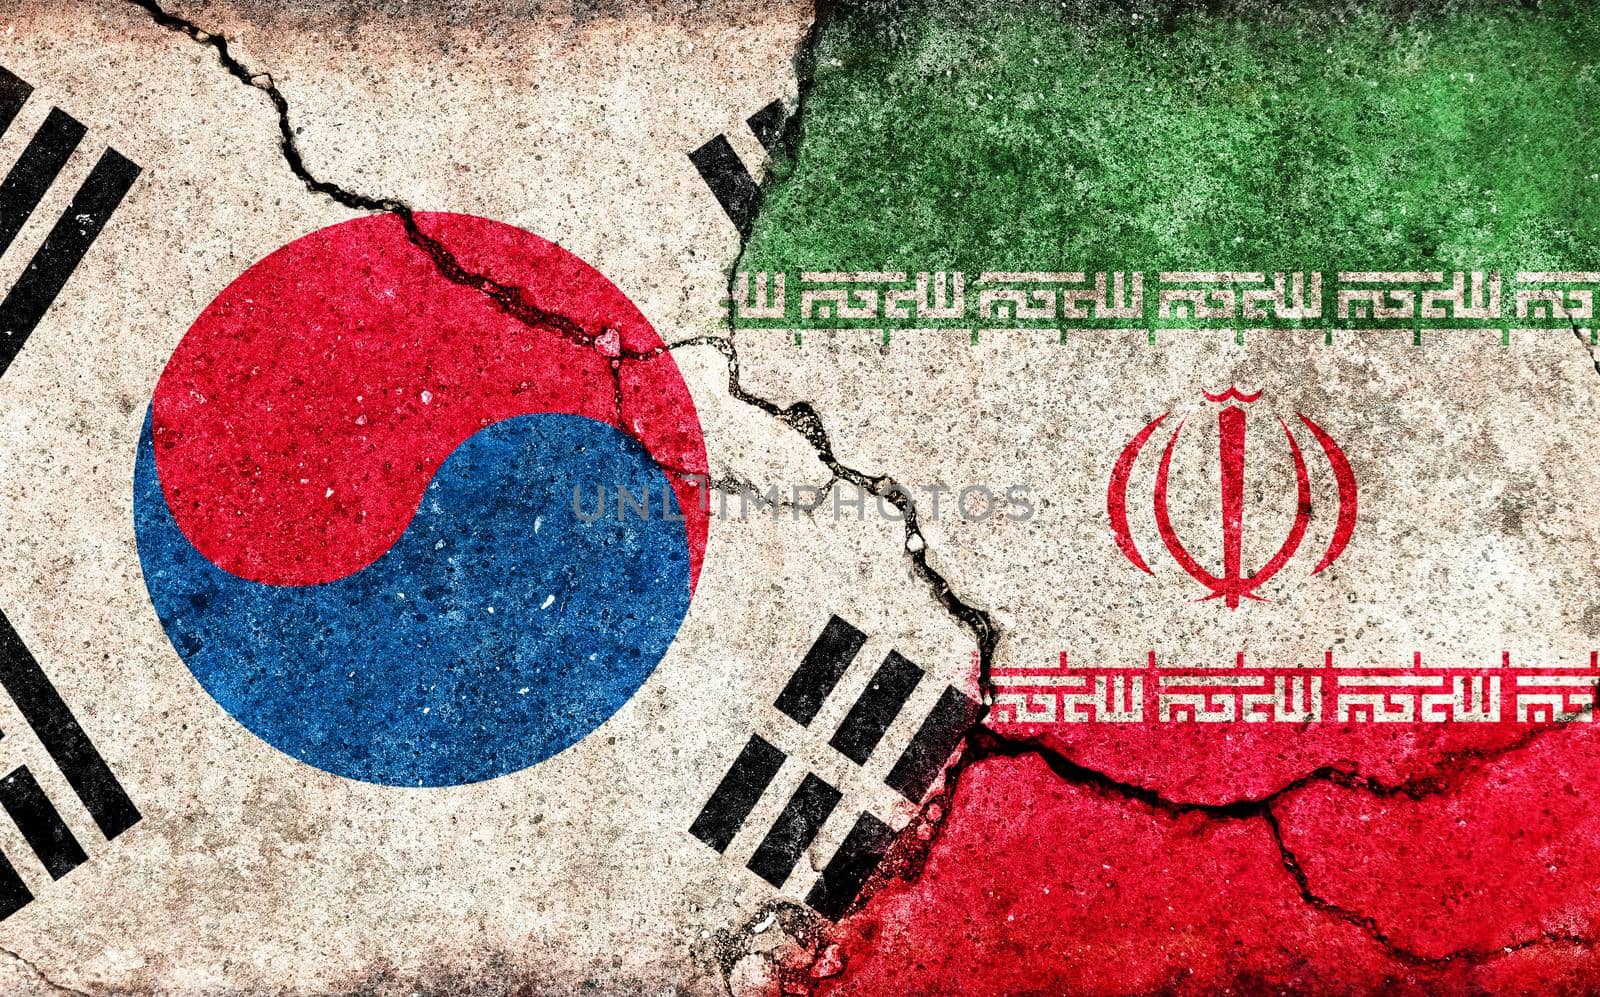 South korea vs Iran (Economical or Political conflict). Grunge country flag illustration (cracked concrete background)